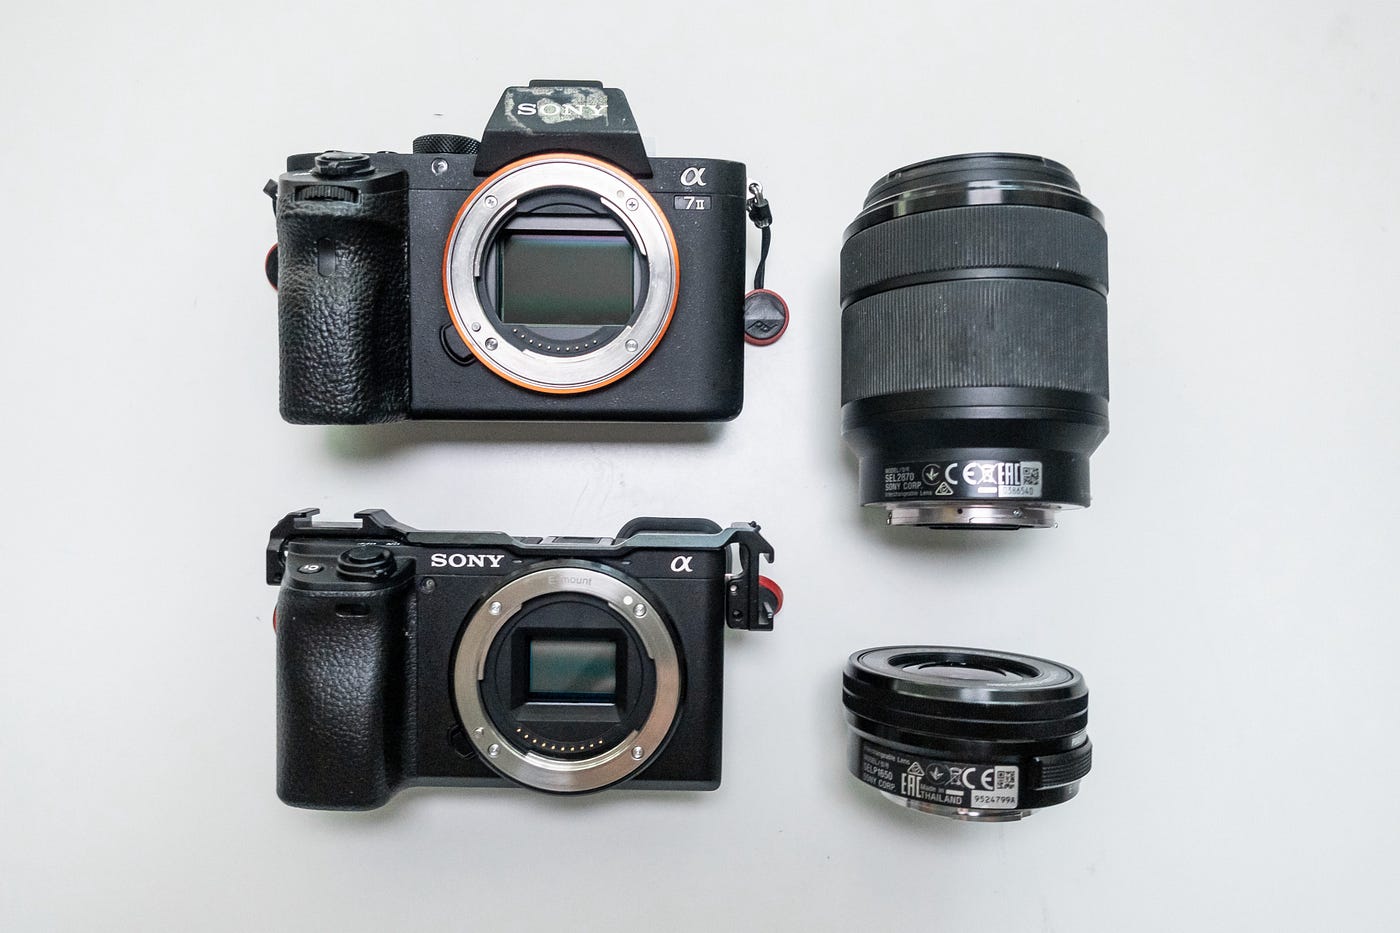 Full Frame VS APS-C Crop Cameras (Sony A7II vs A6400), by Jameses Tech, Jameses Tech Reviews